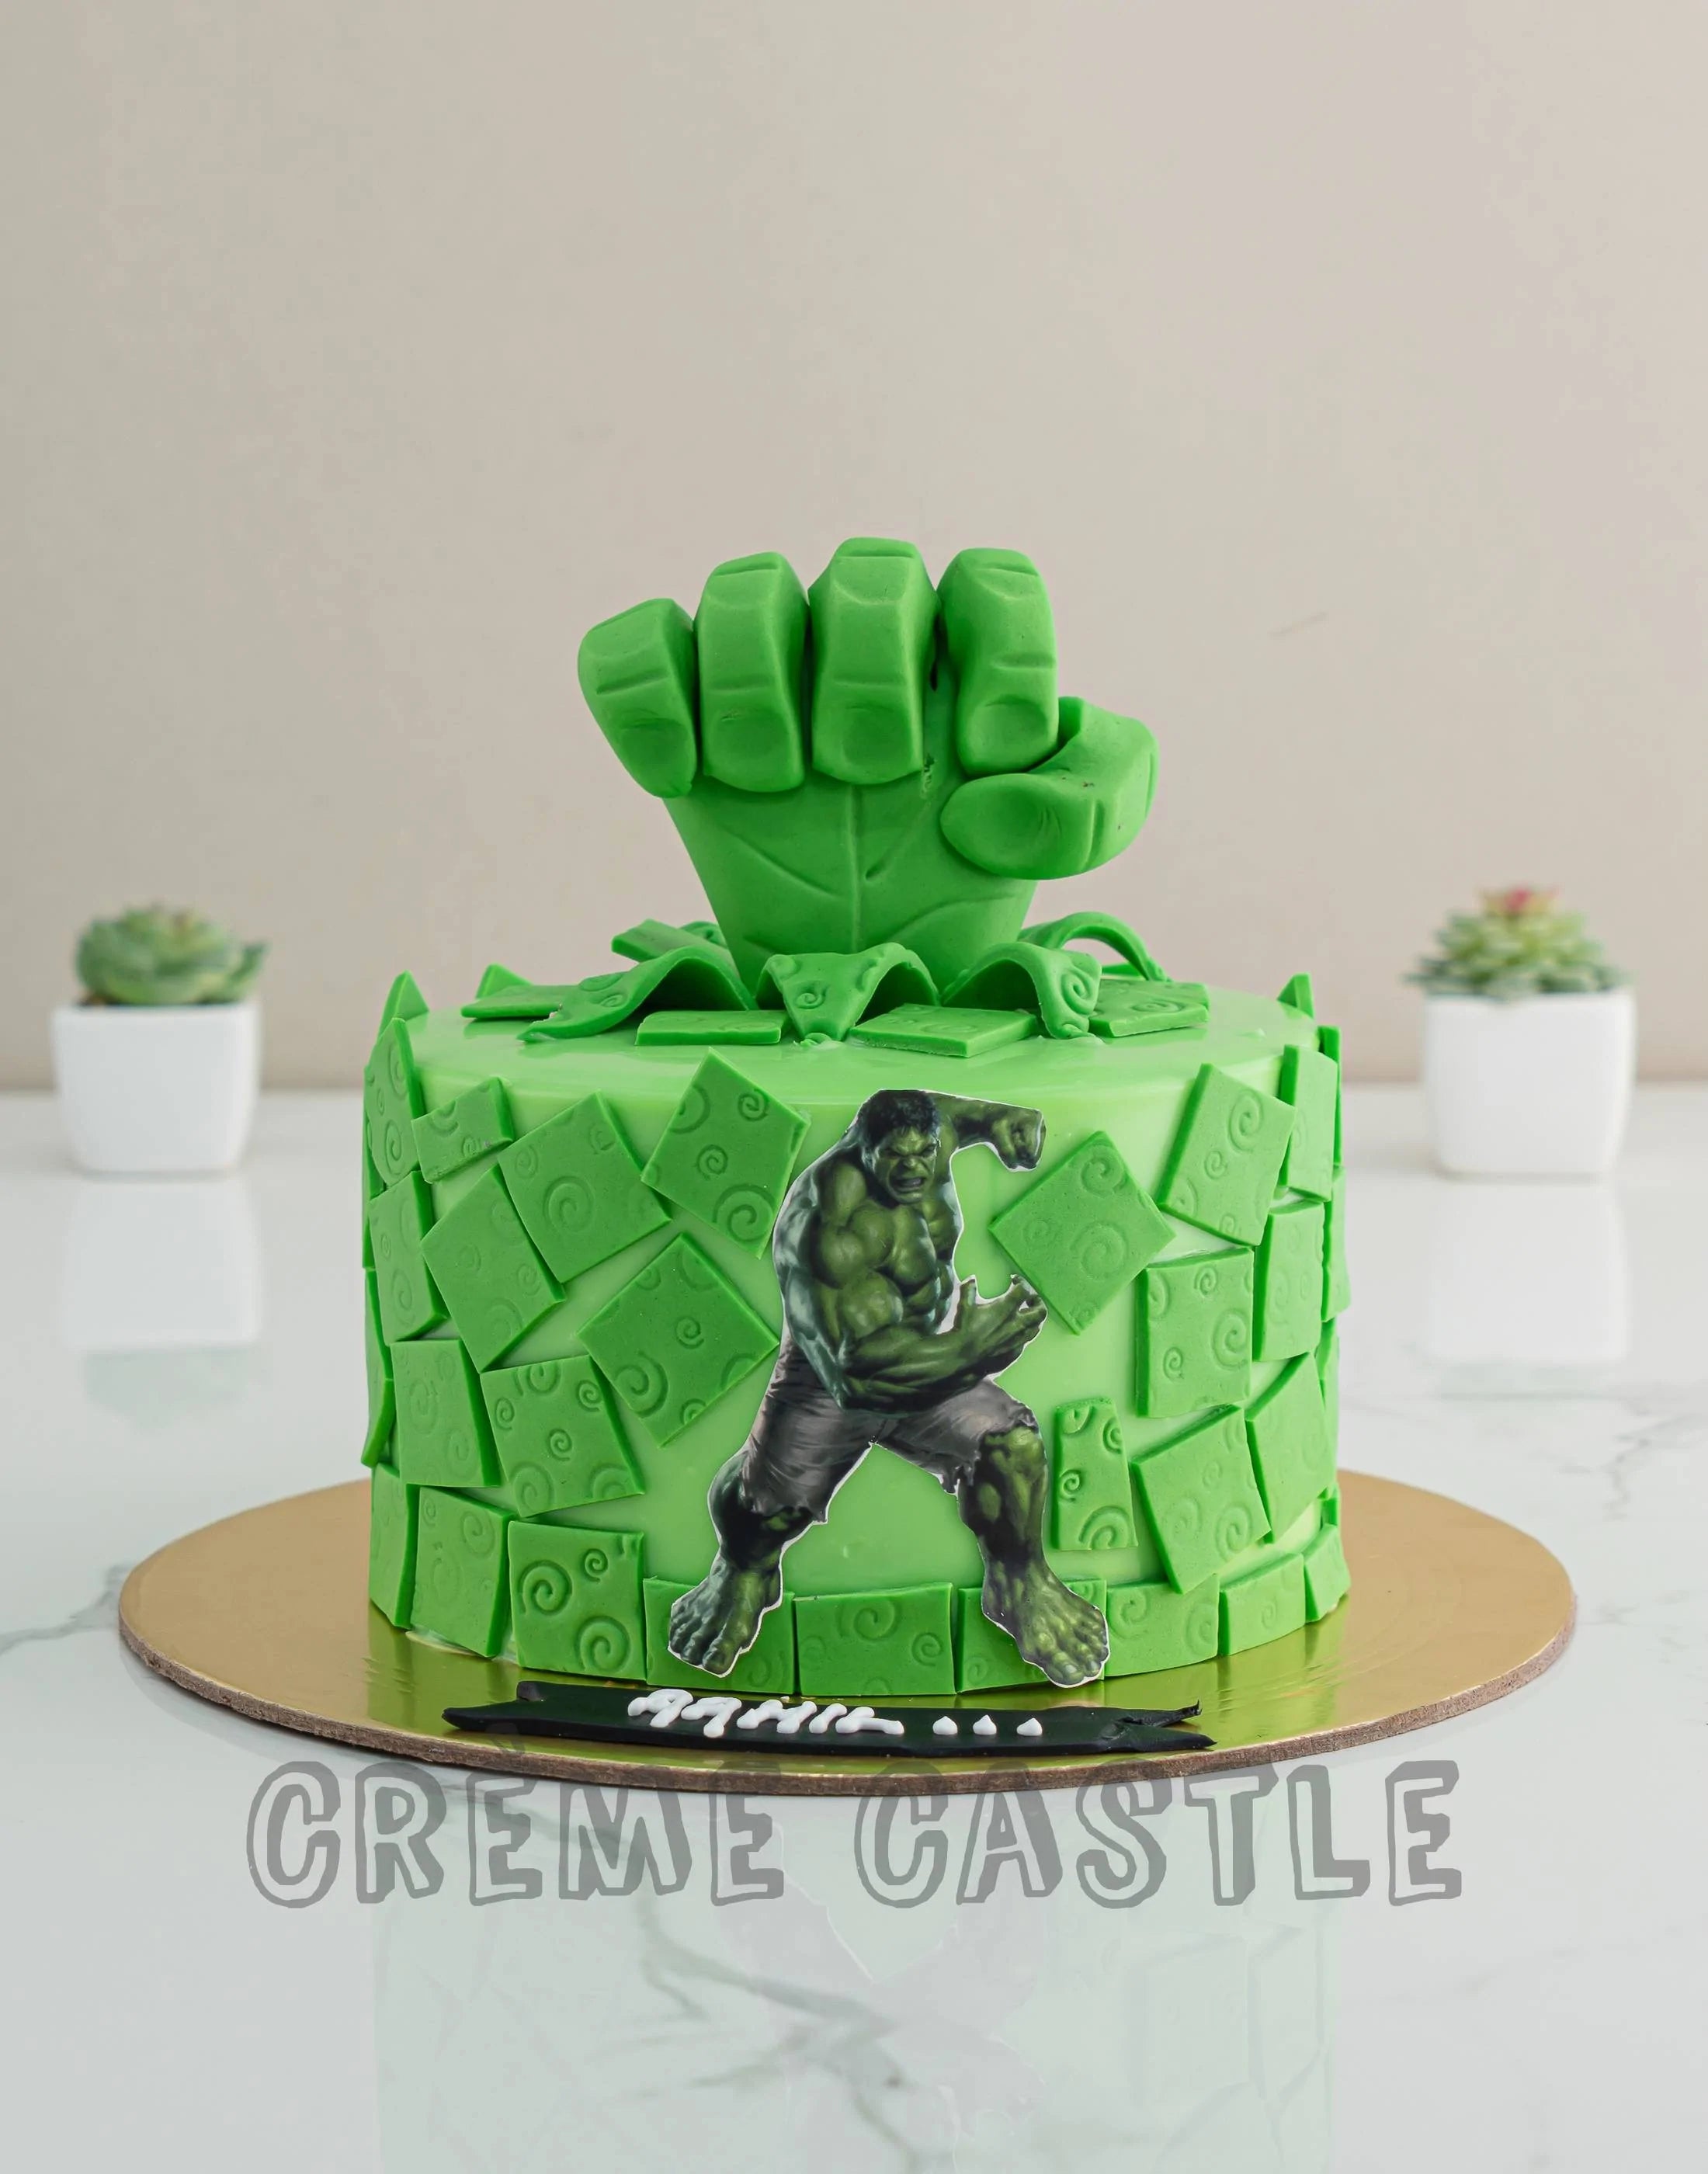 Keaton's Incredible Hulk Cake